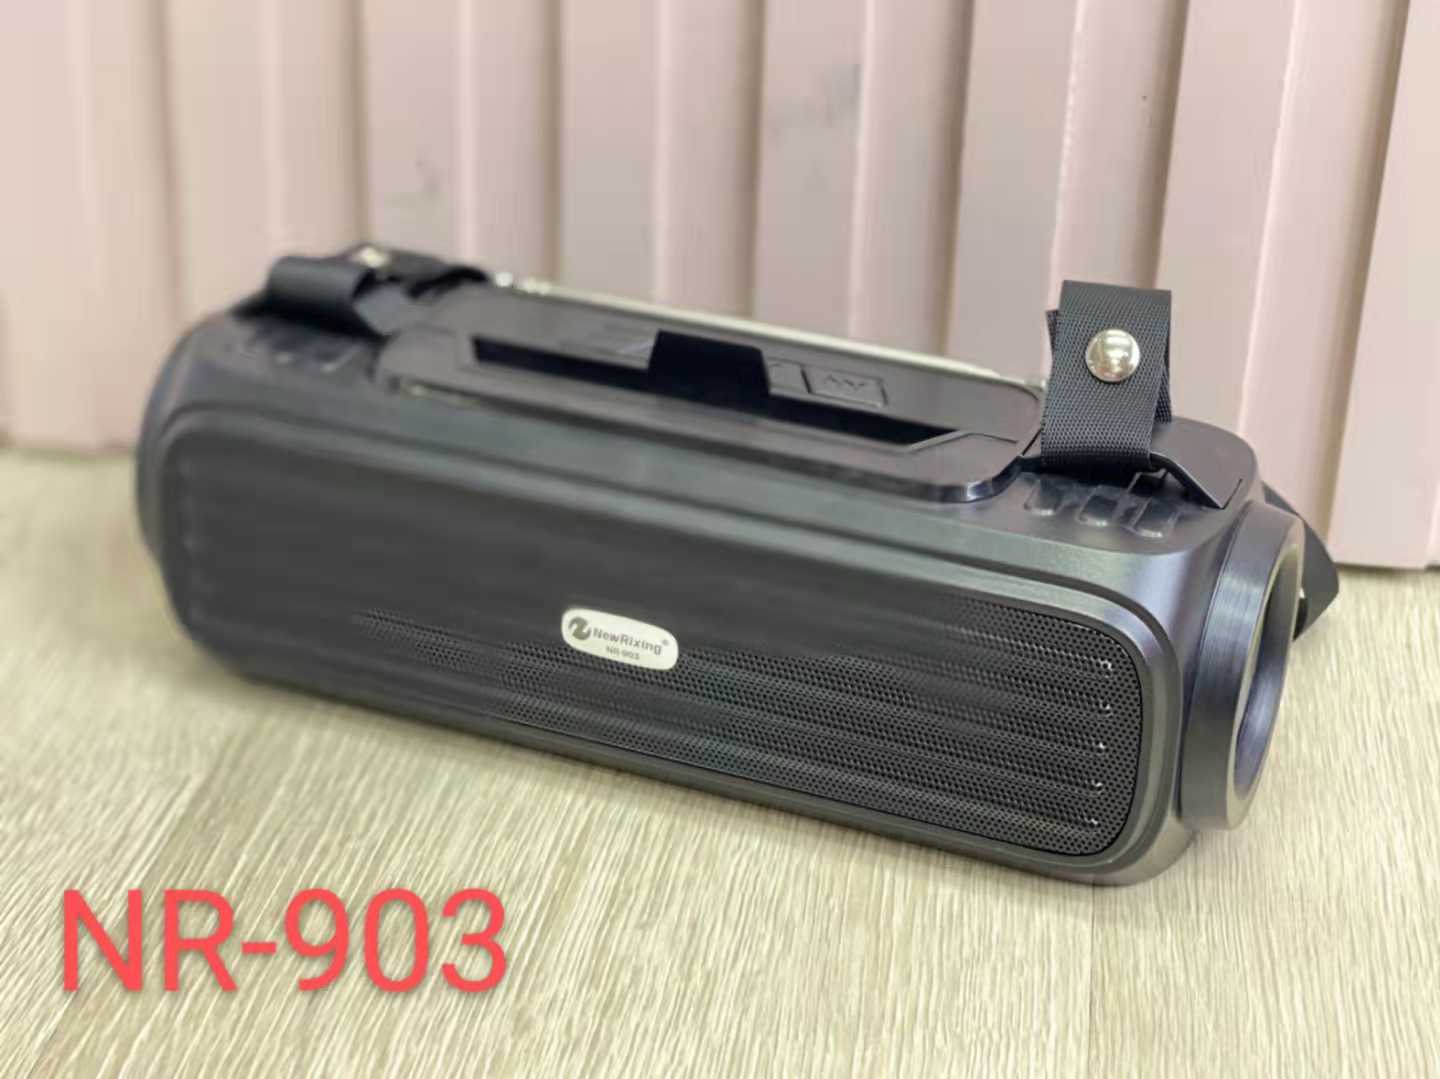 Wireless Bluetooth speaker - NR903 - 909032 - Black